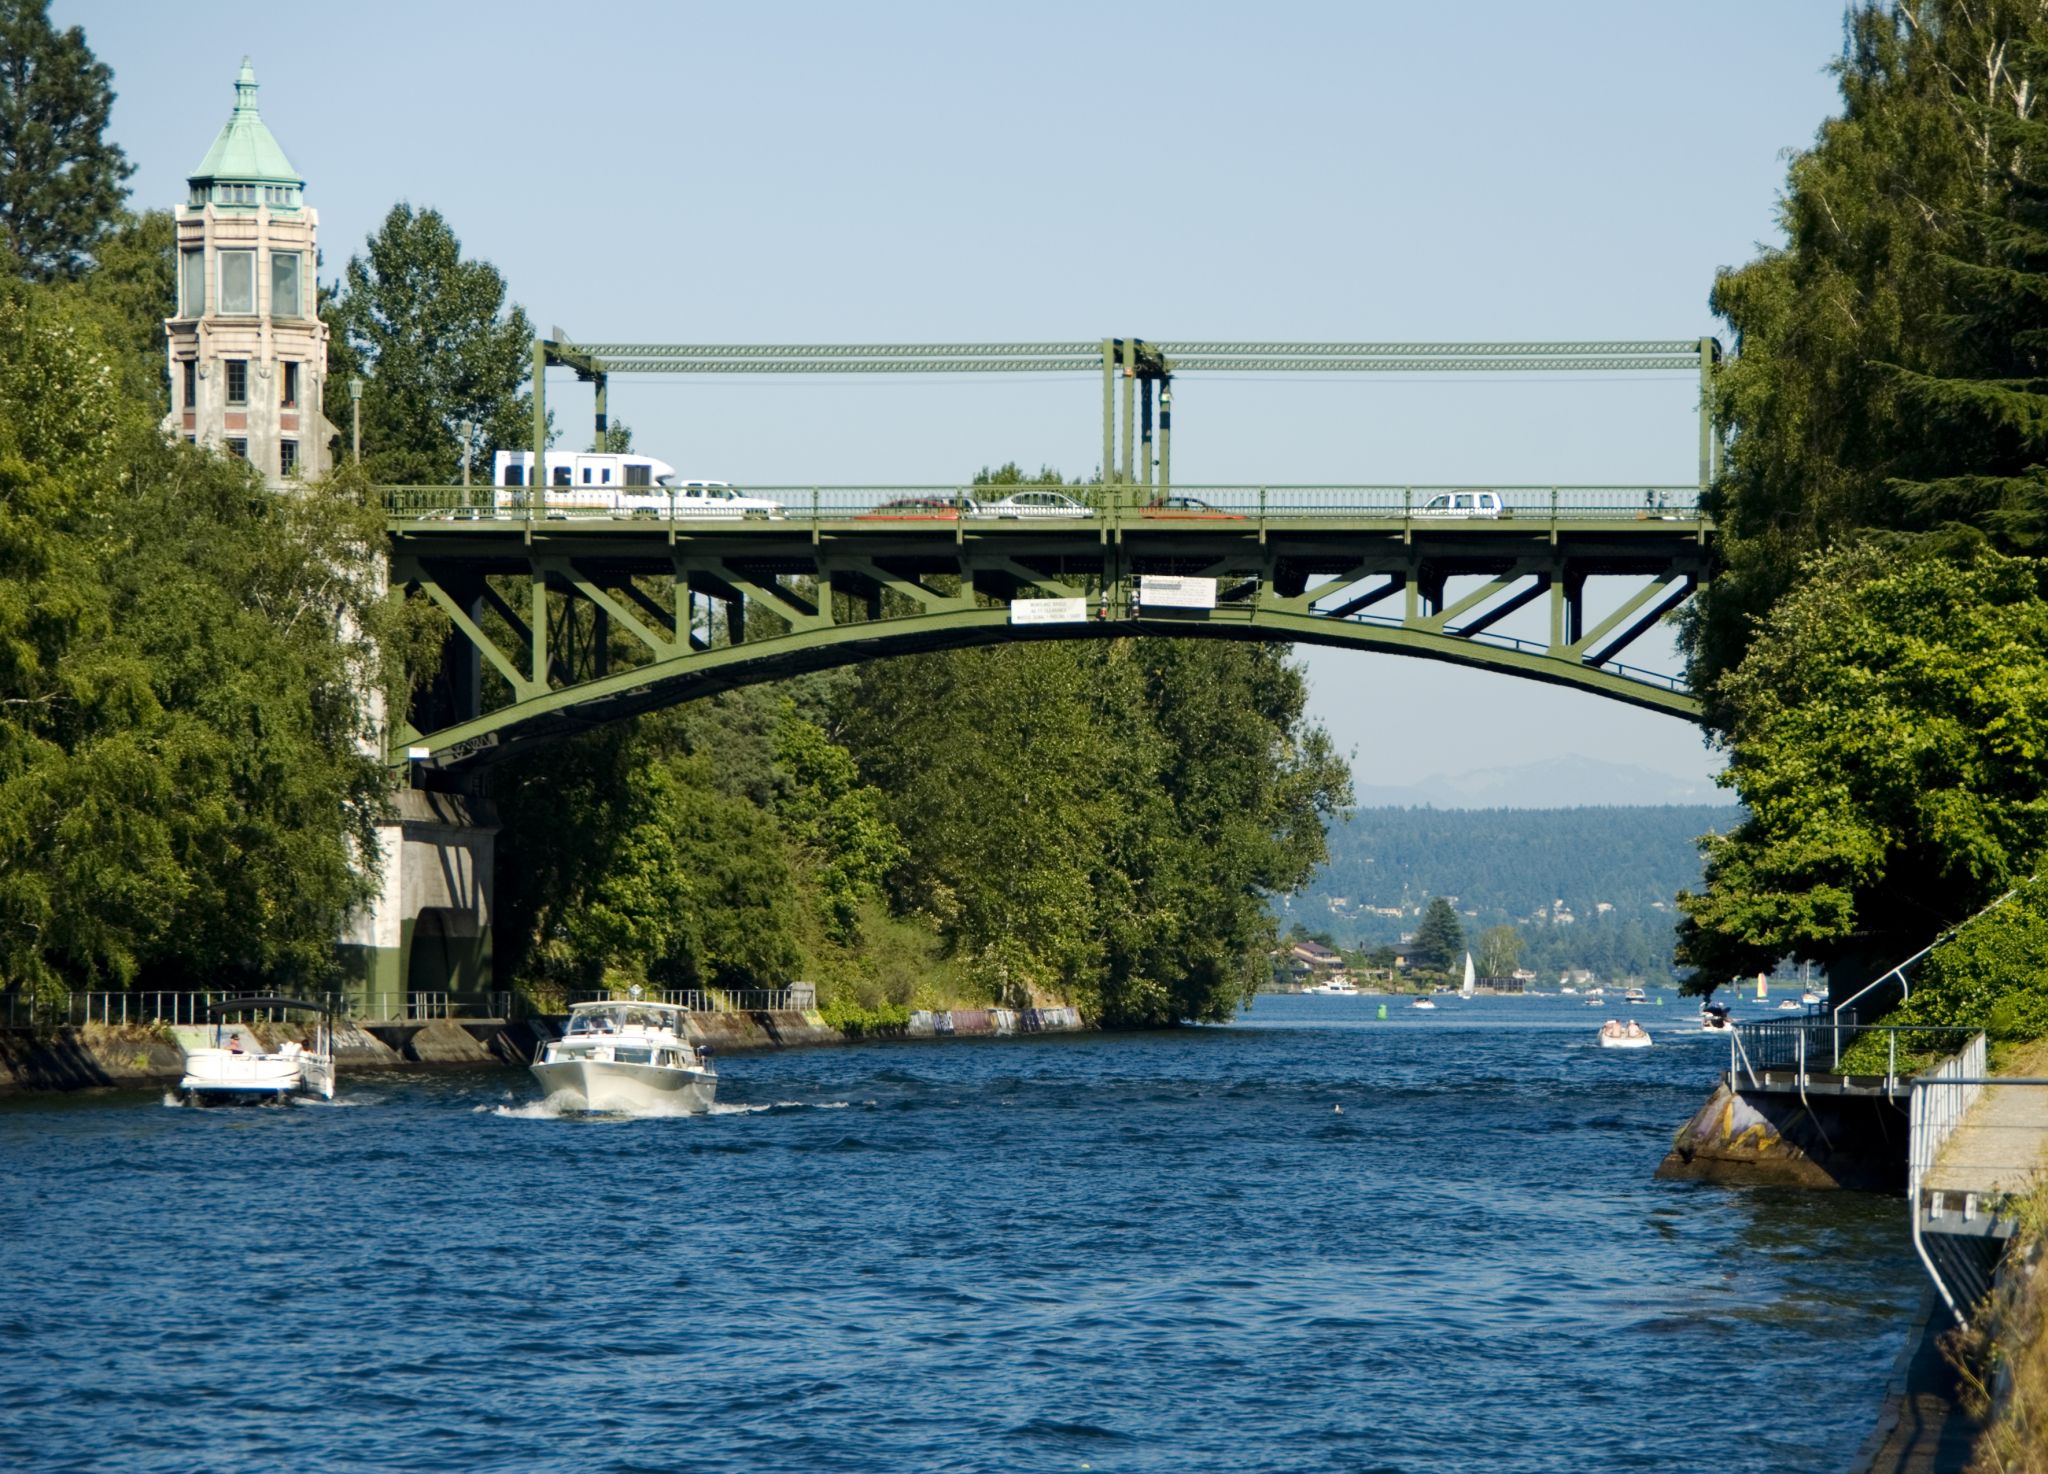 Plan ahead Seattle's Montlake Bridge to close Friday morning ahead of